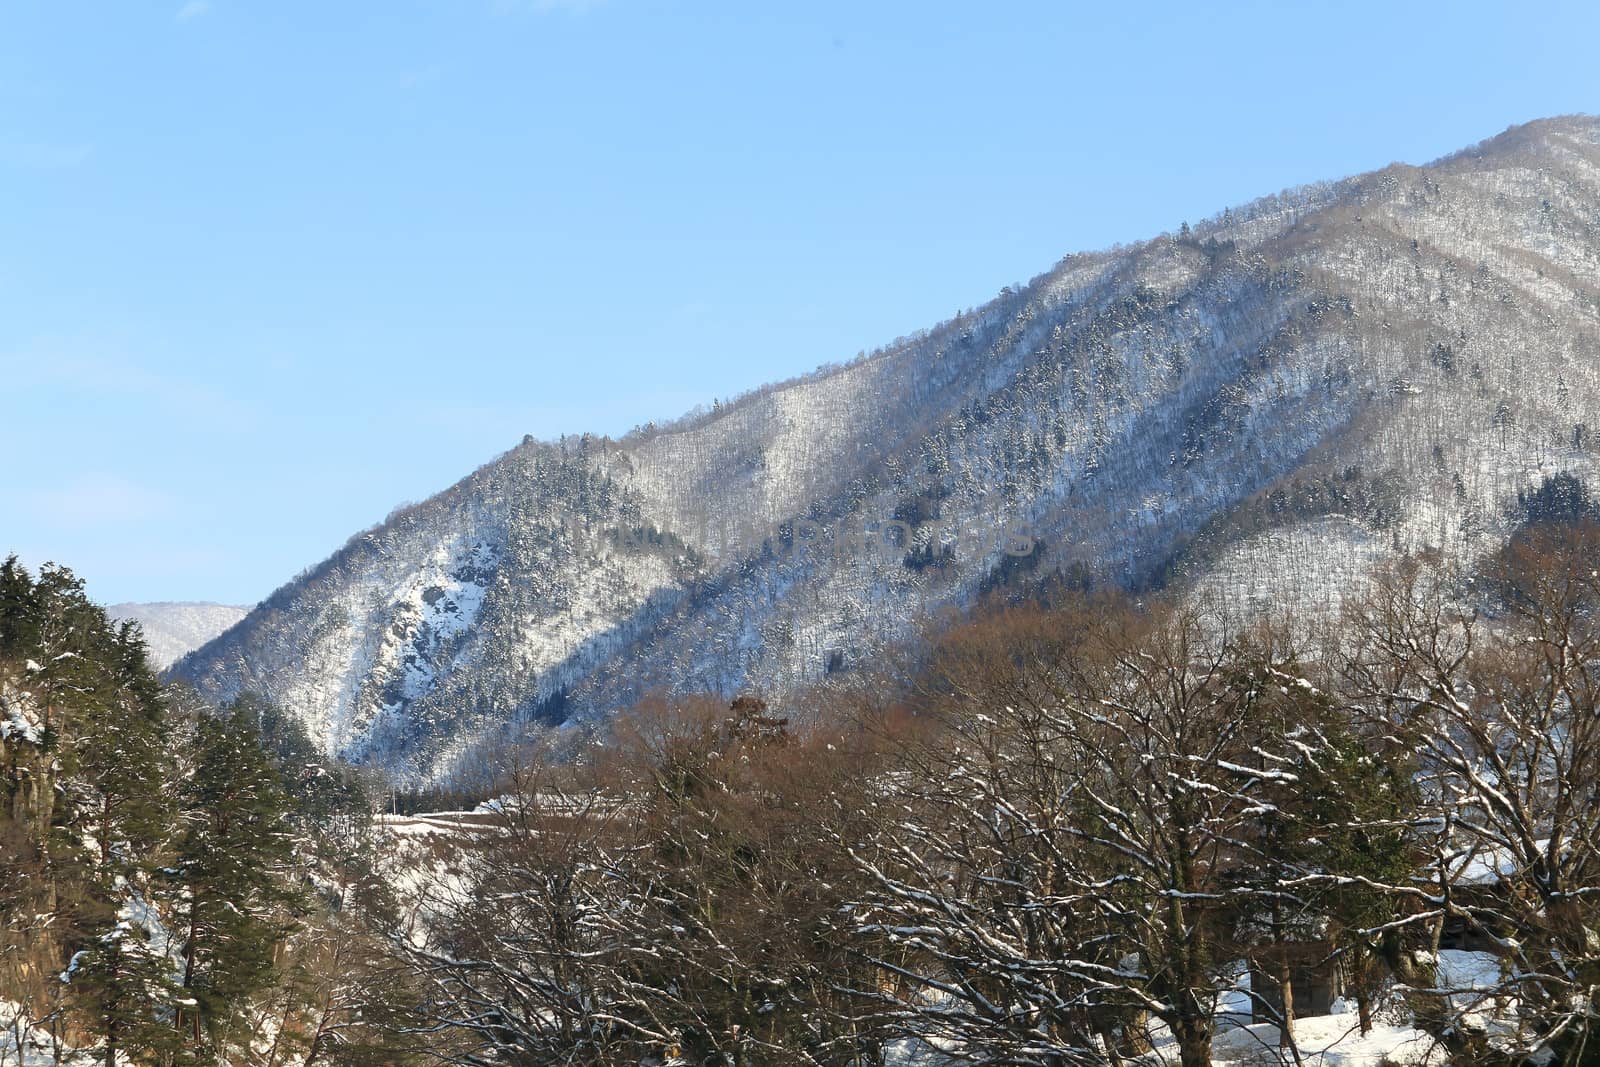 Beautiful mountains in winter,  Takayama;Japan